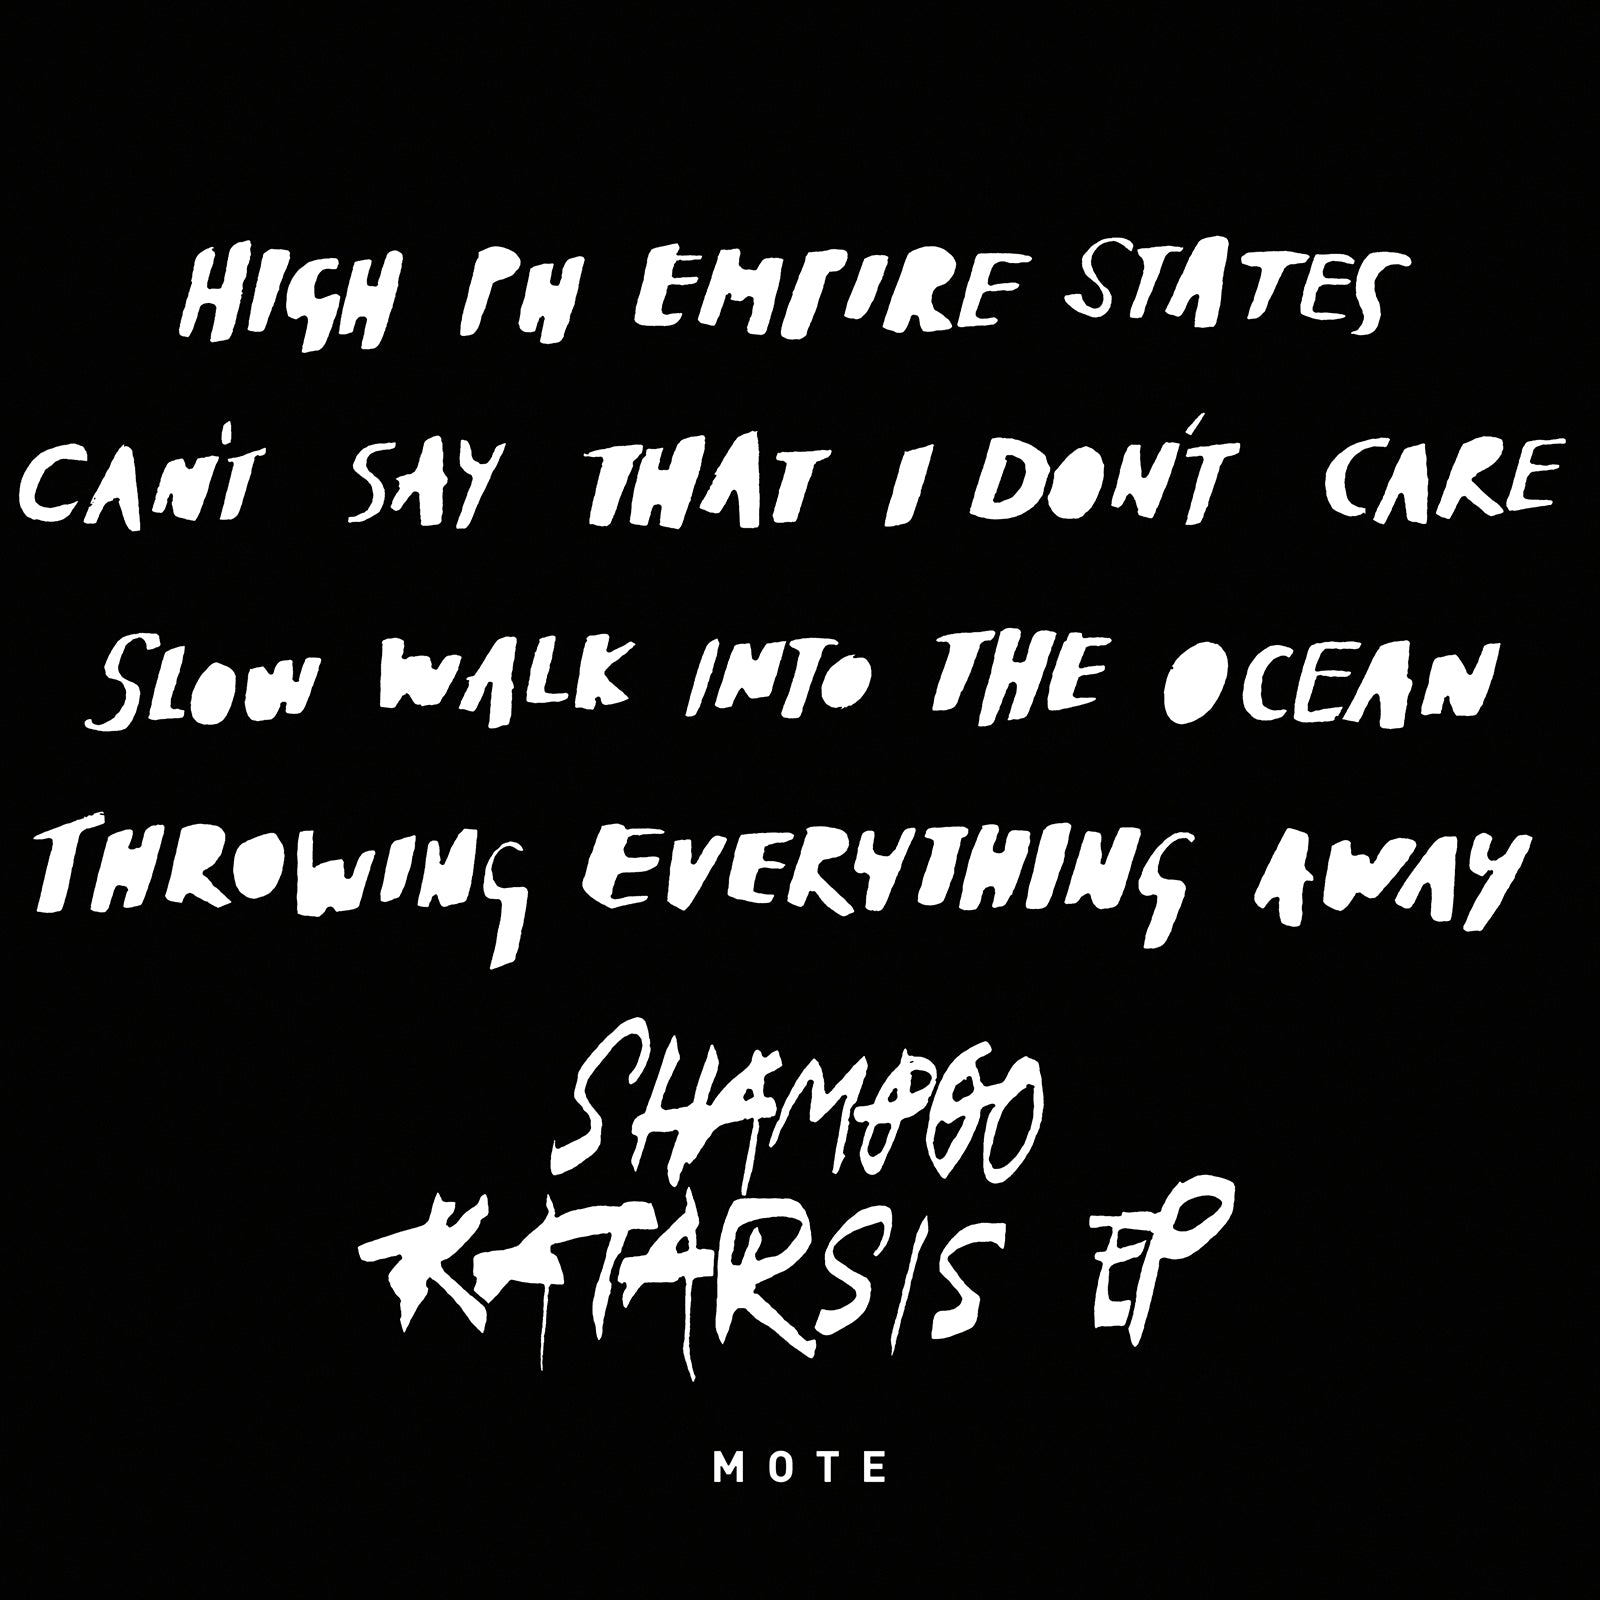 Katarsis EP 12" by Shampoo